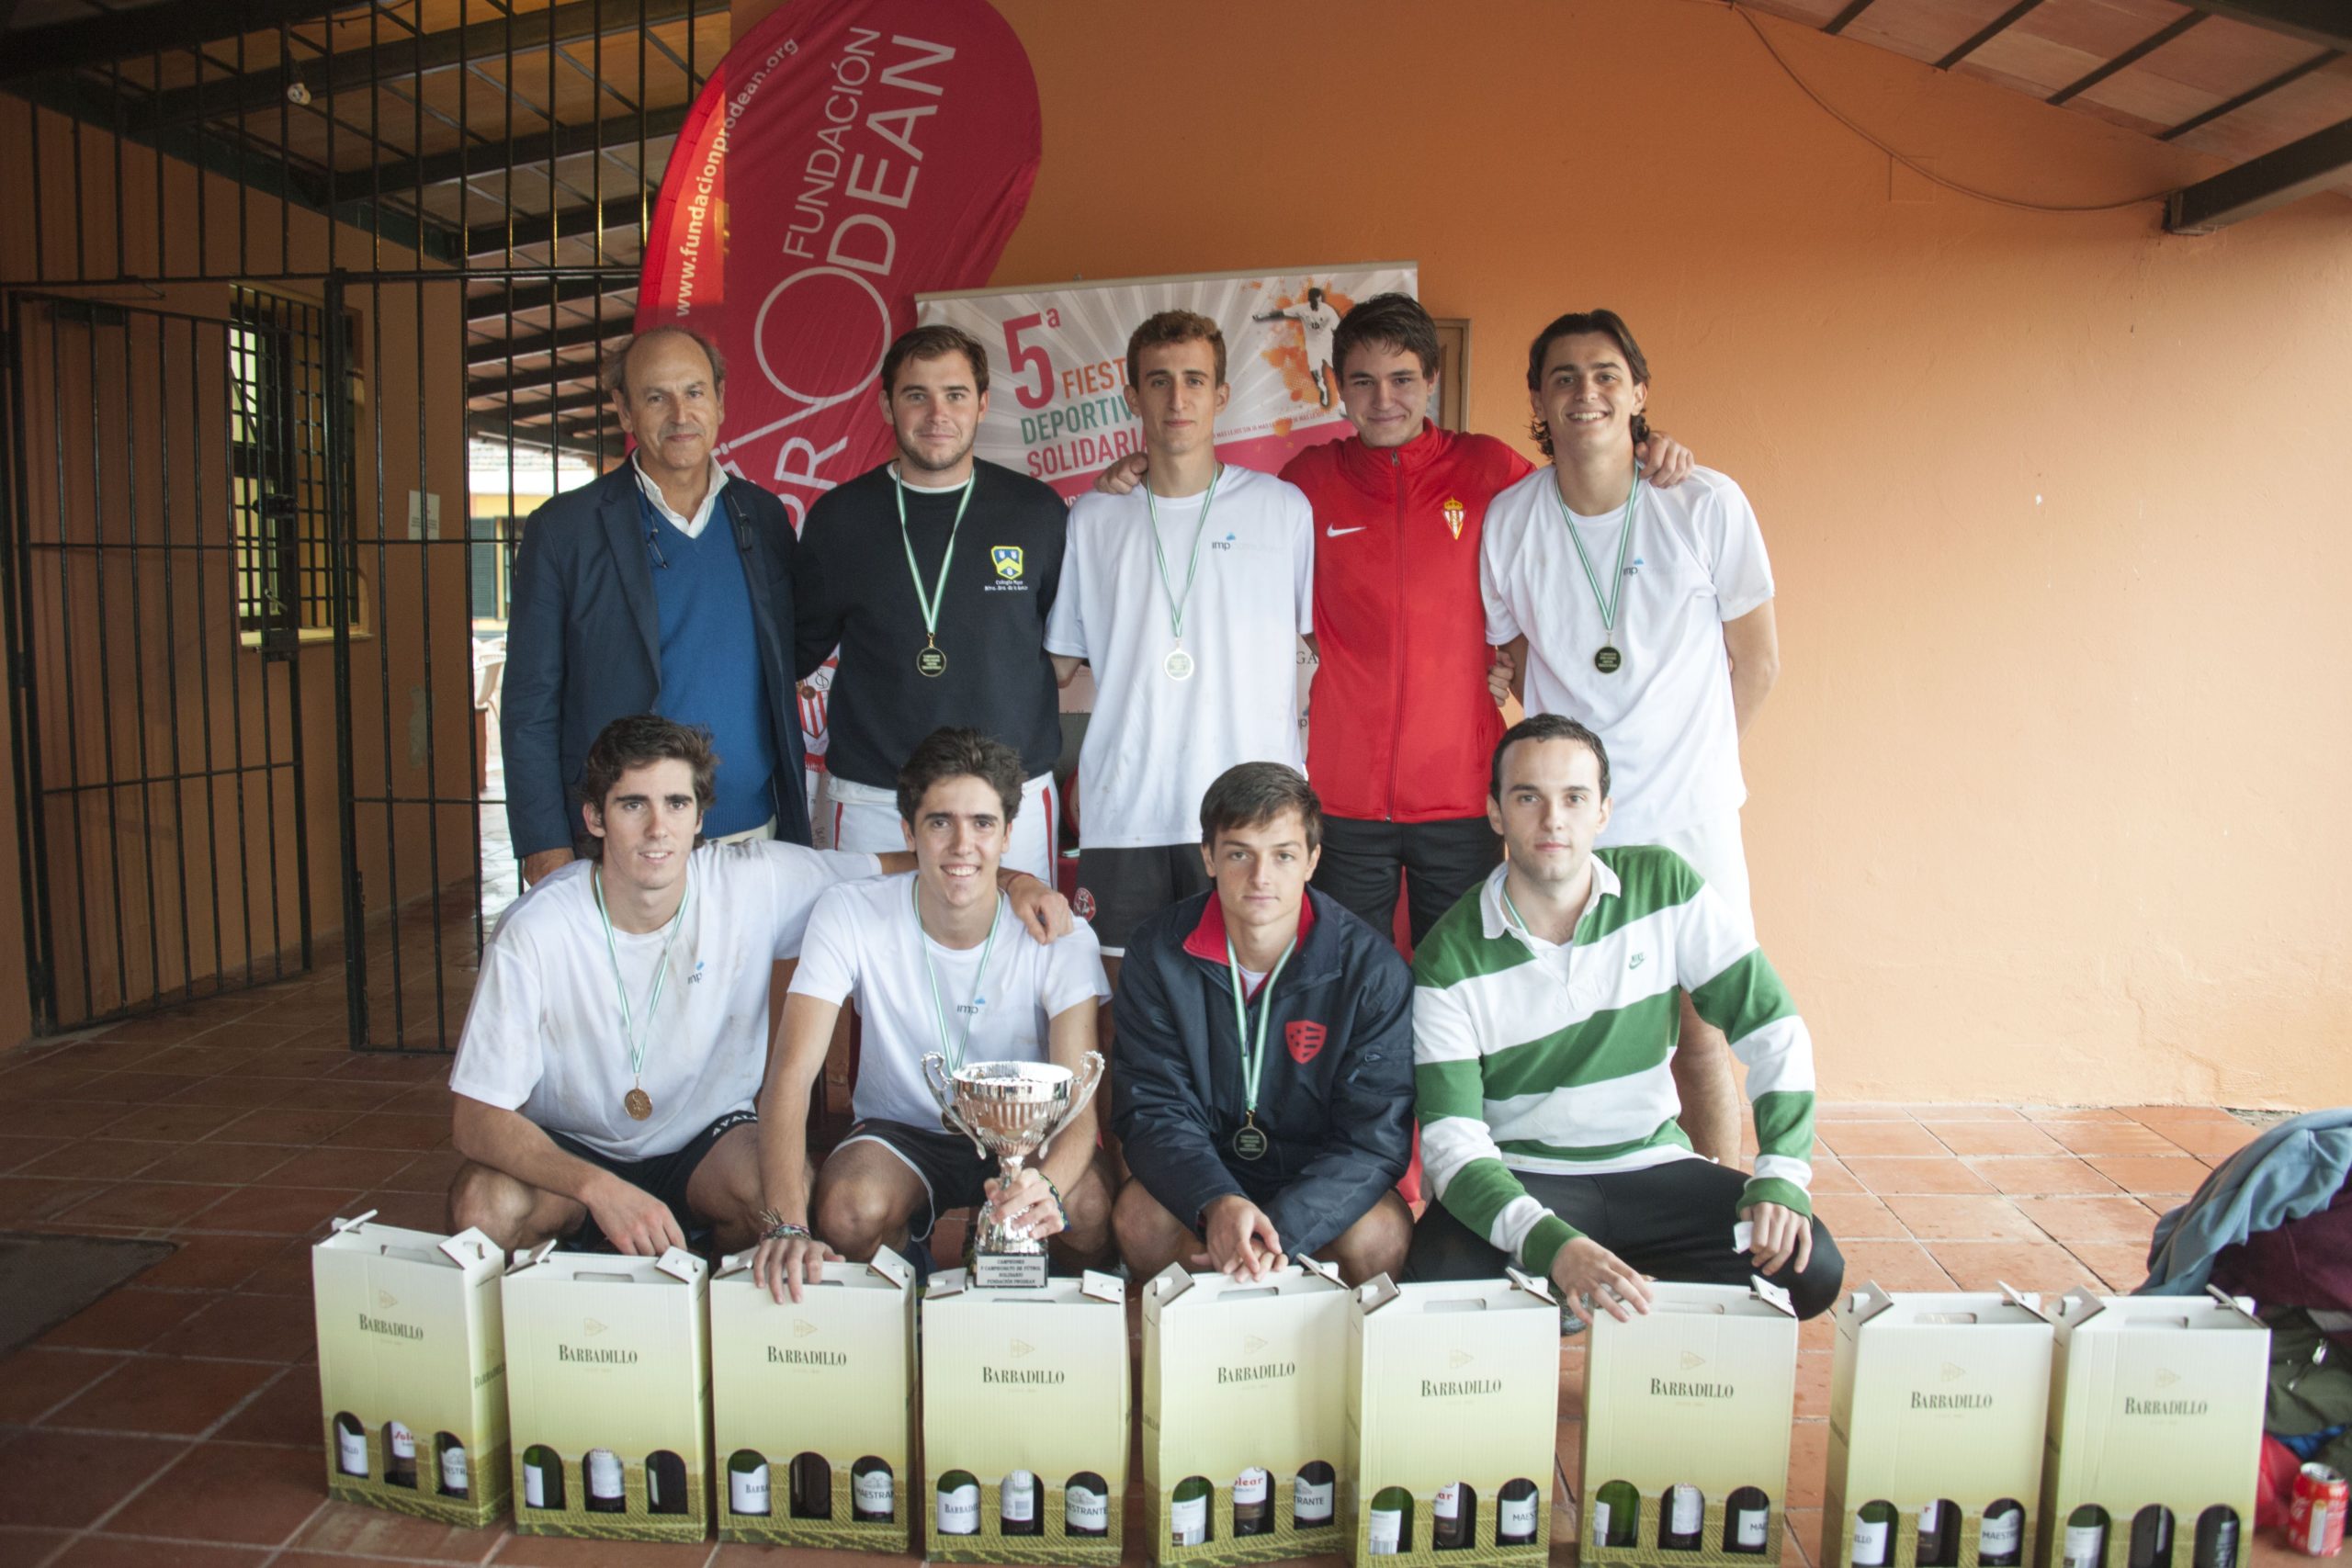 La V Fiesta Deportiva Solidaria de la Fundacion Prodean se celebra con éxito a pesar de la lluvia